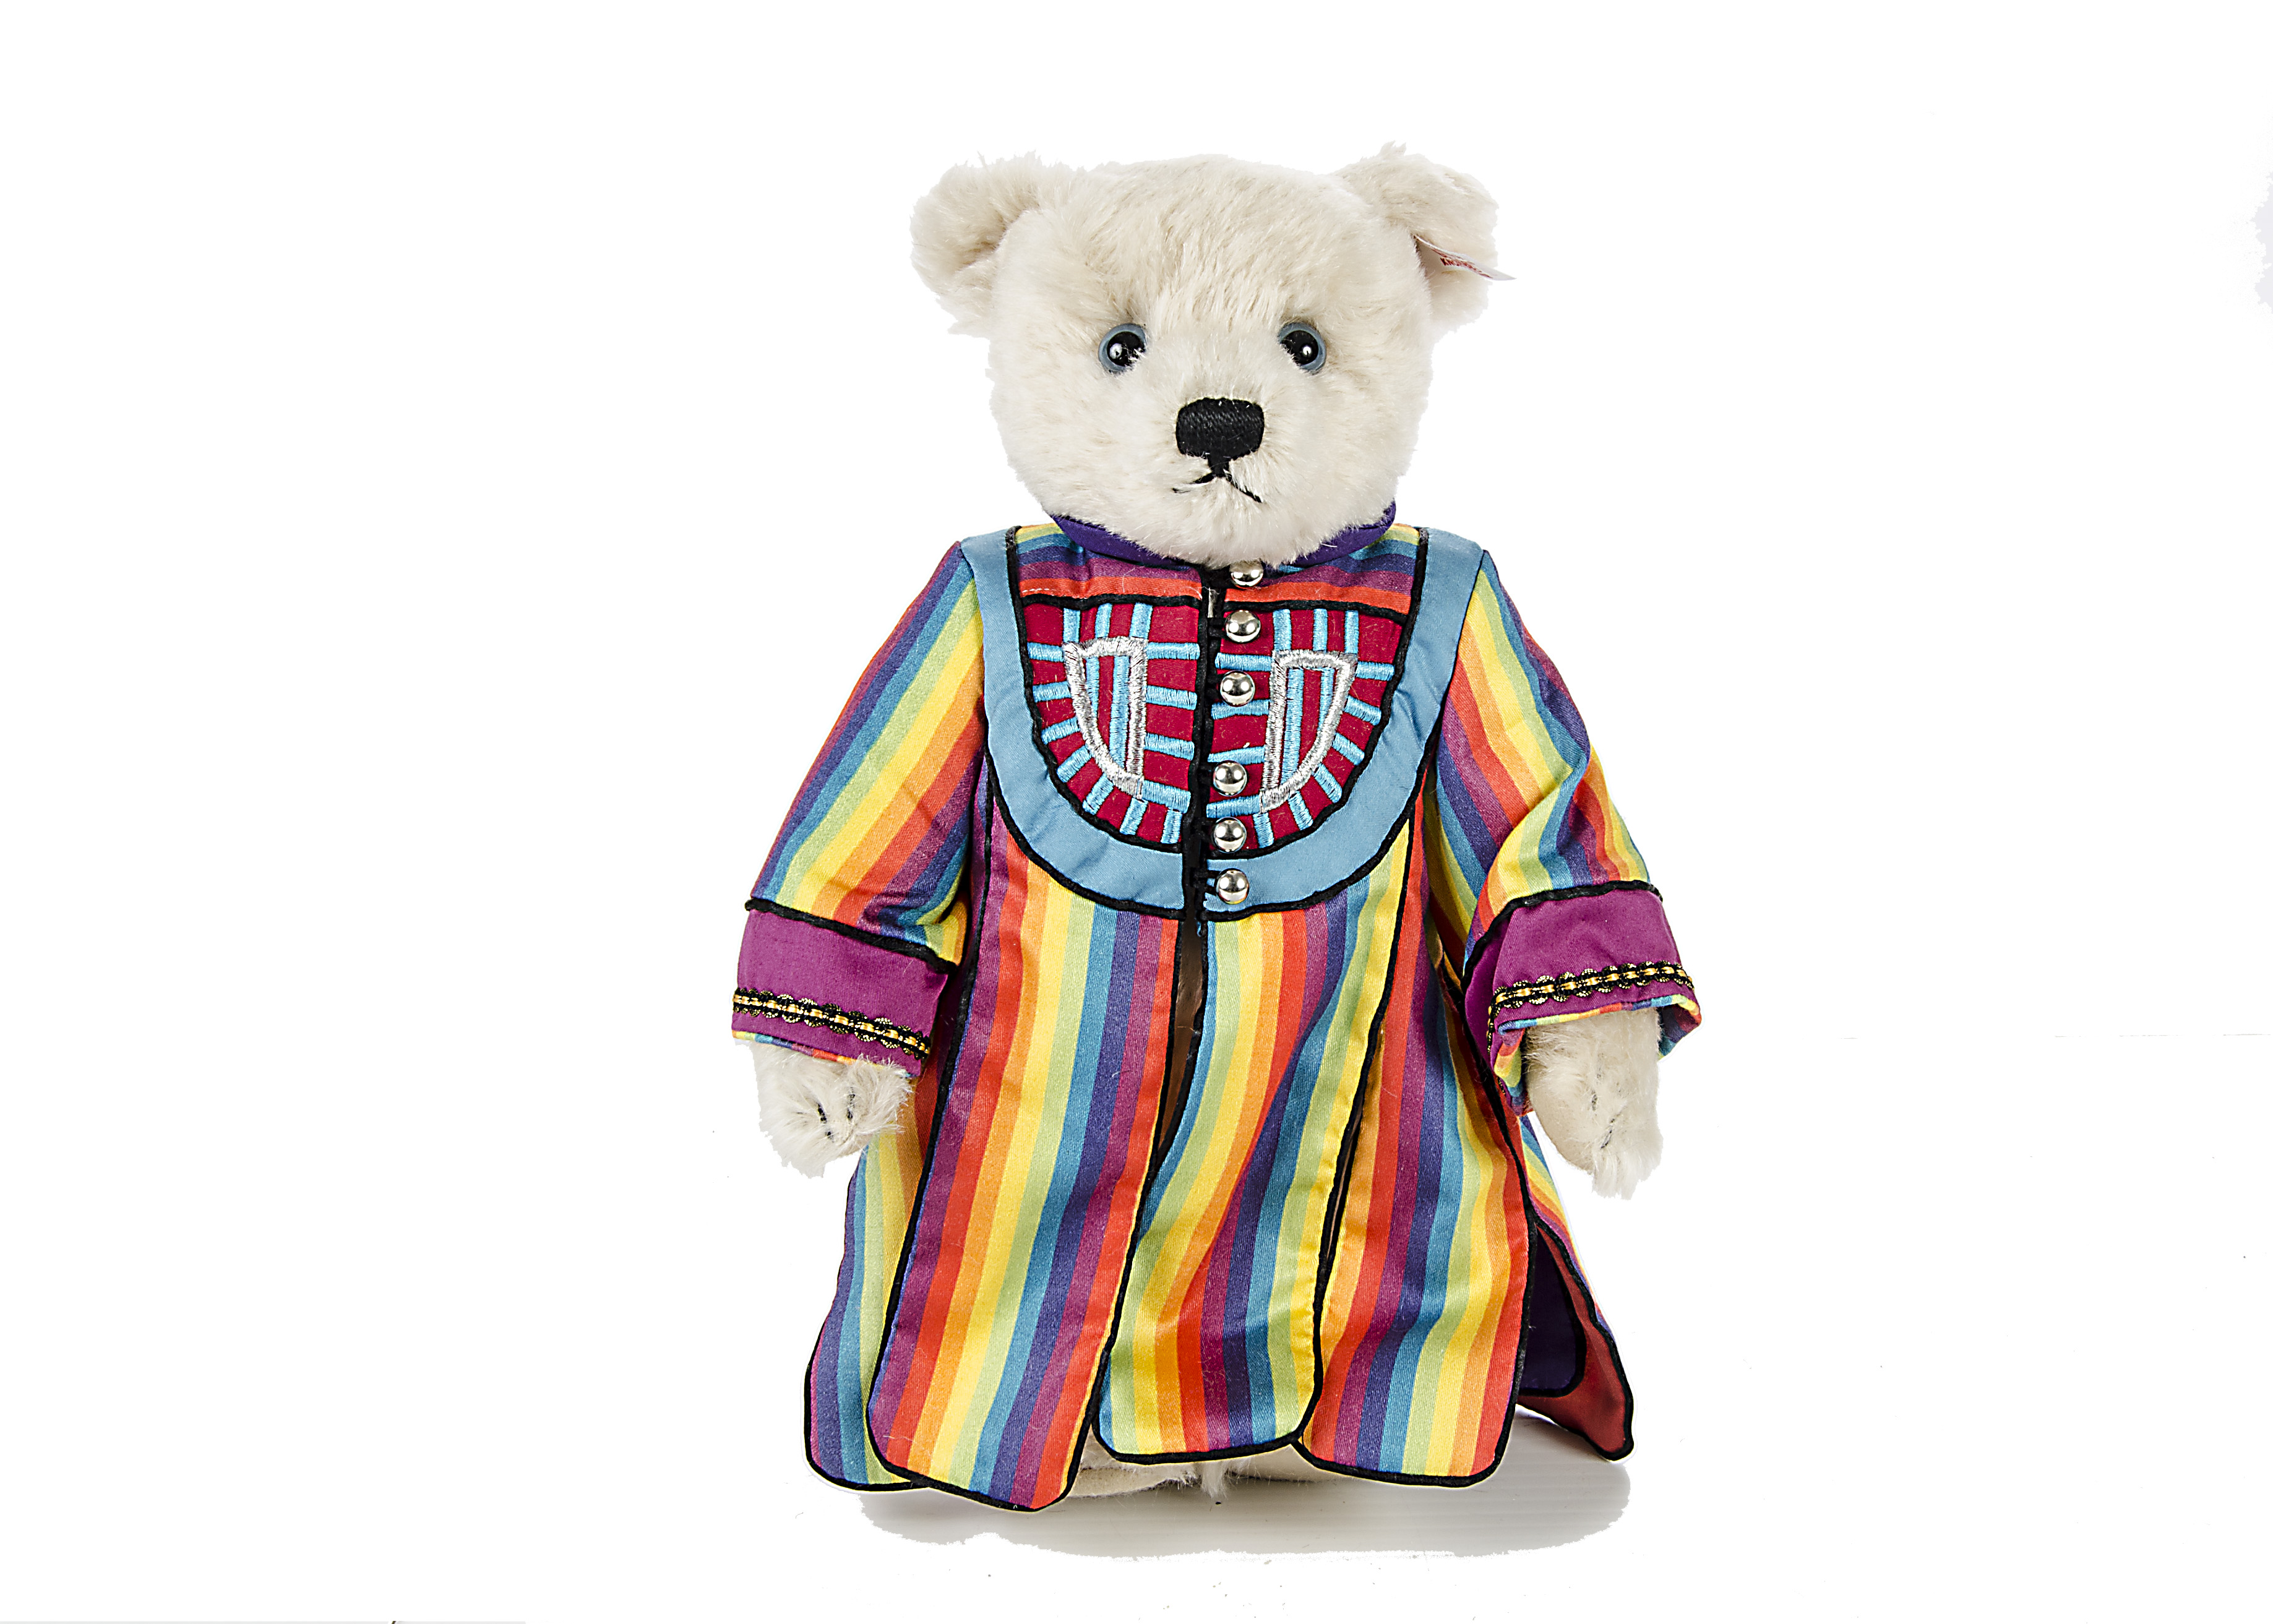 A Steiff Limited Edition Musical Teddy Bear Joseph, 1522 of 2008, in original box with